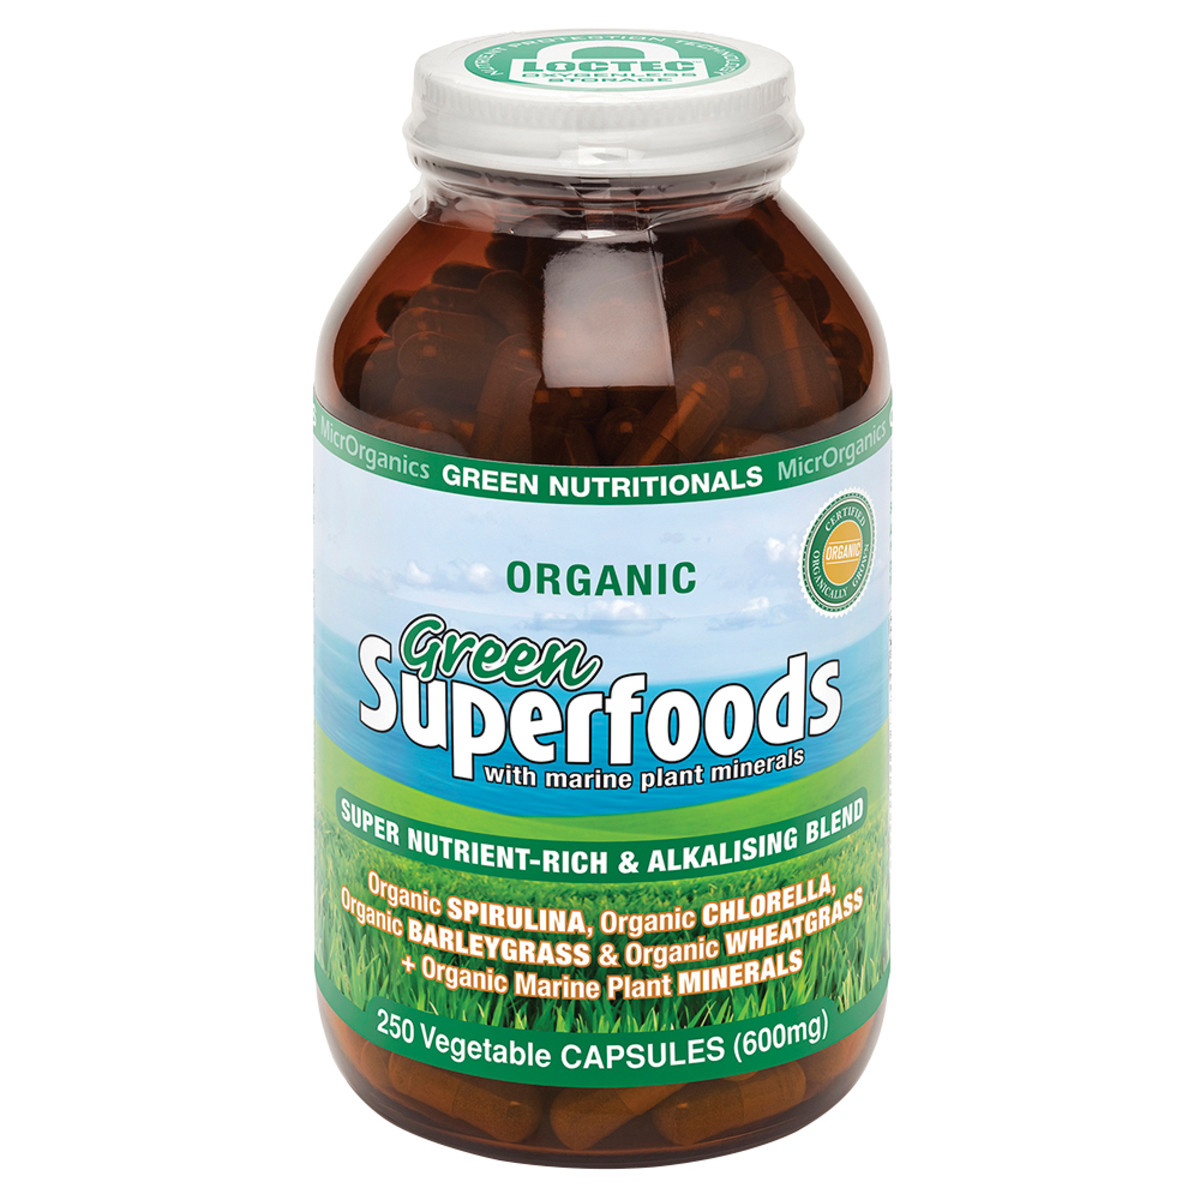 MICRORGANICS - Green Superfoods